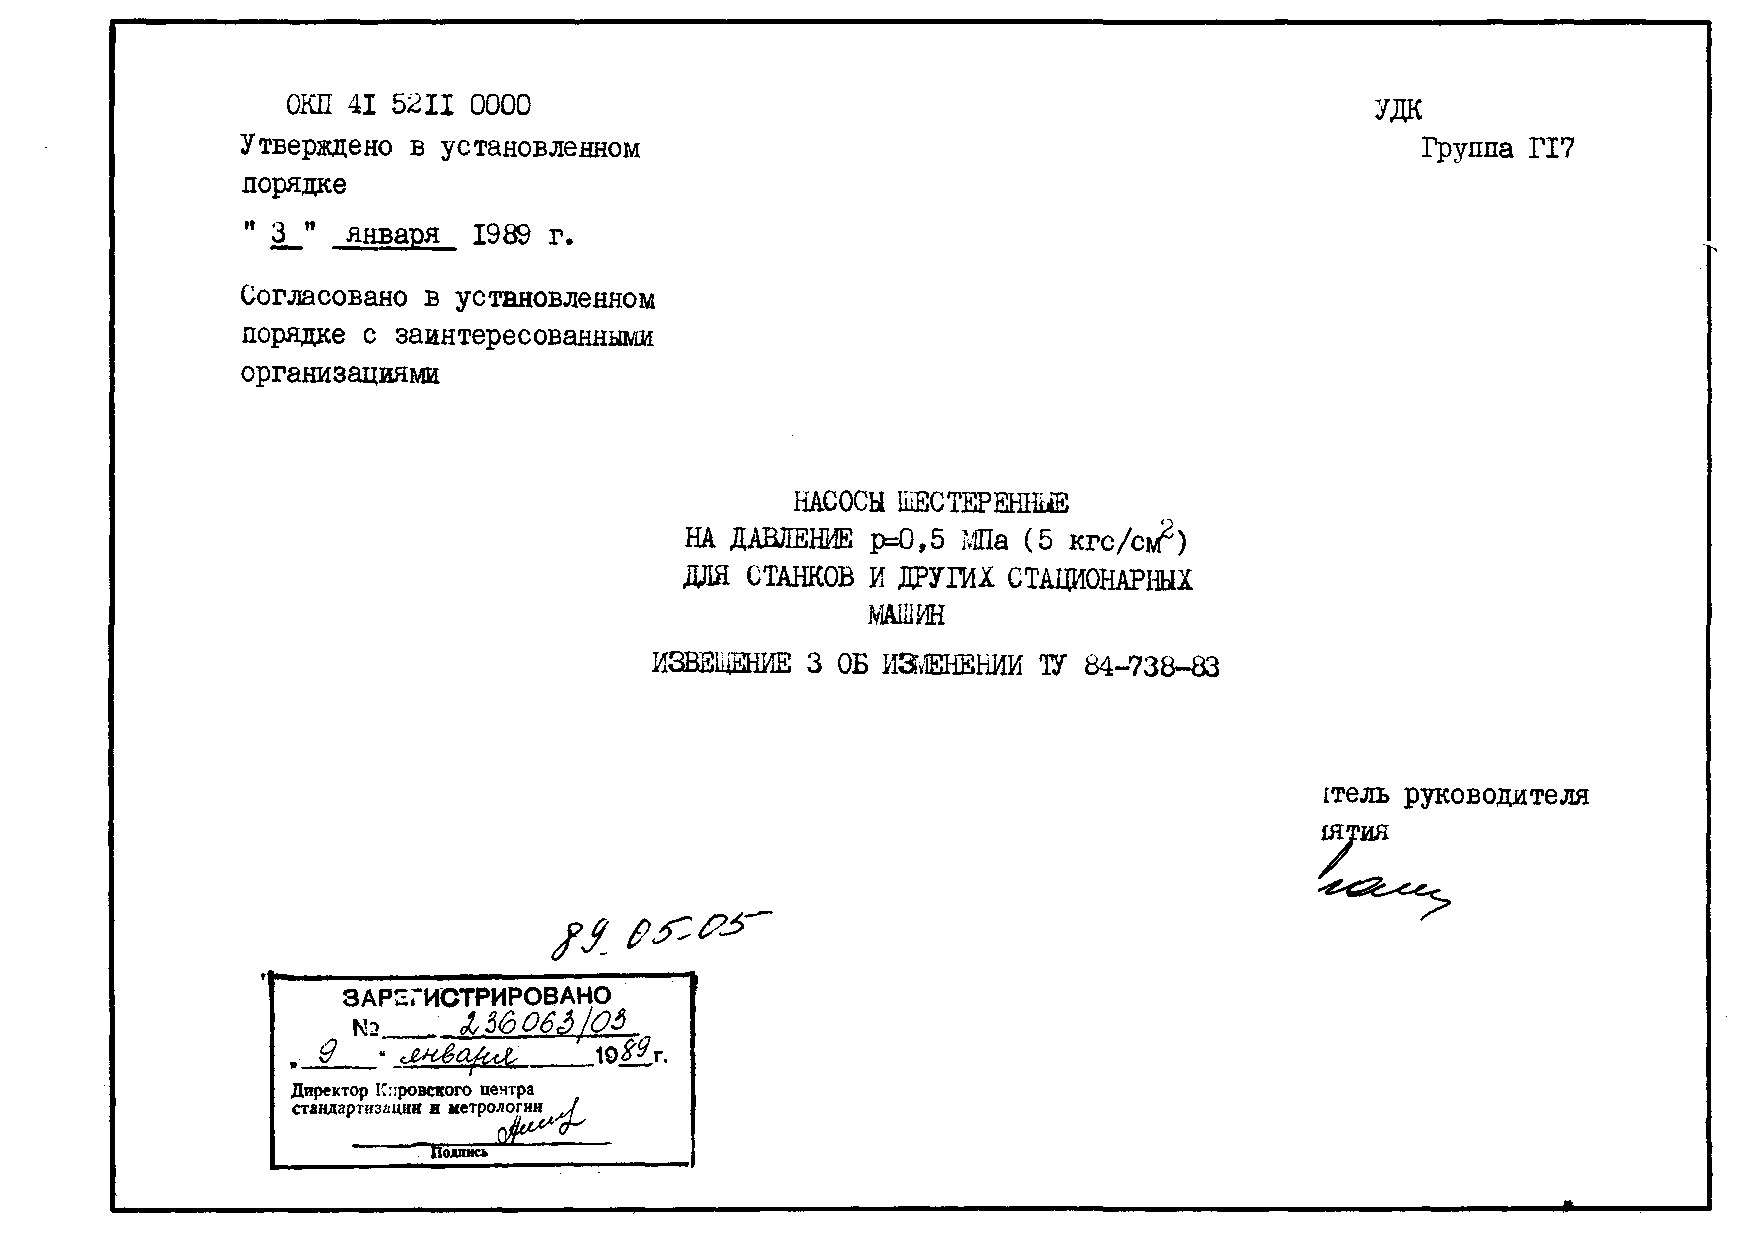 ТУ 84-738-83